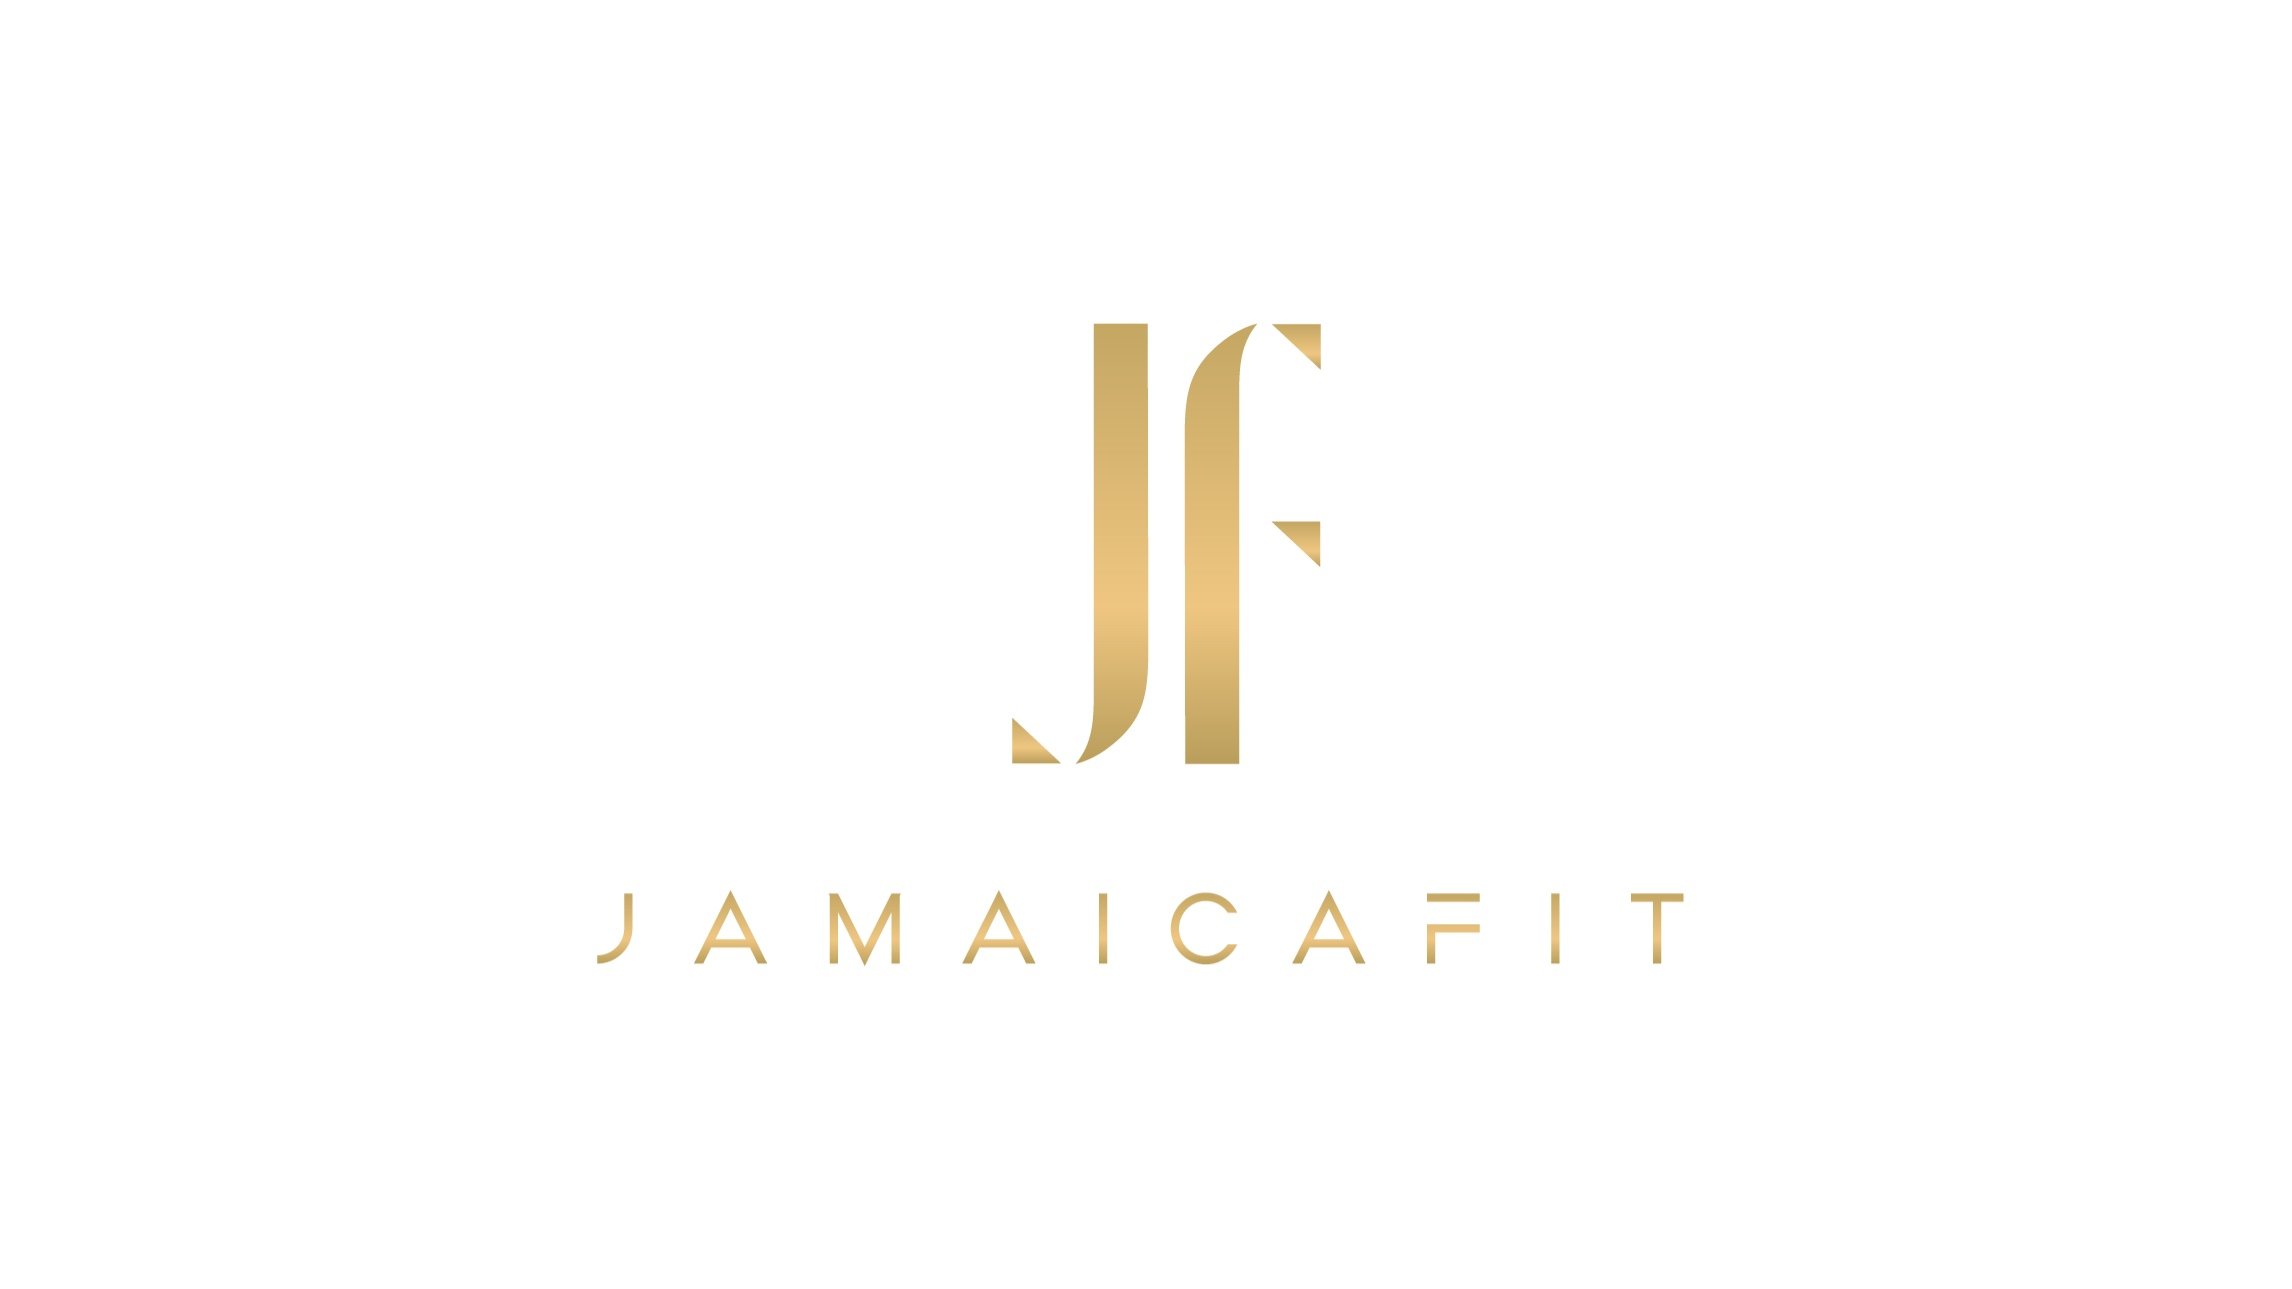 JamaicaFit